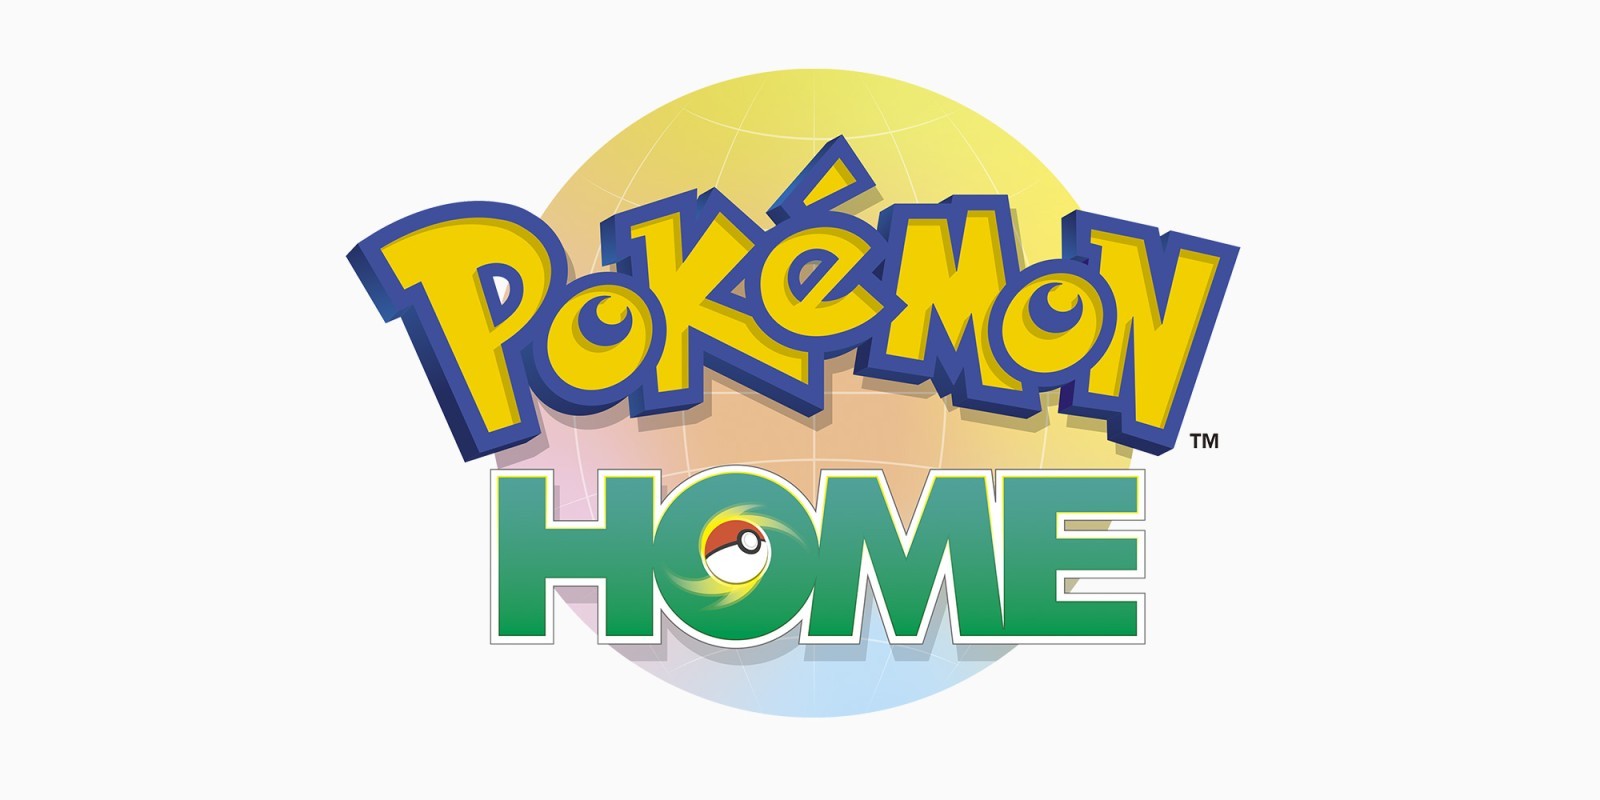 pokemon-home